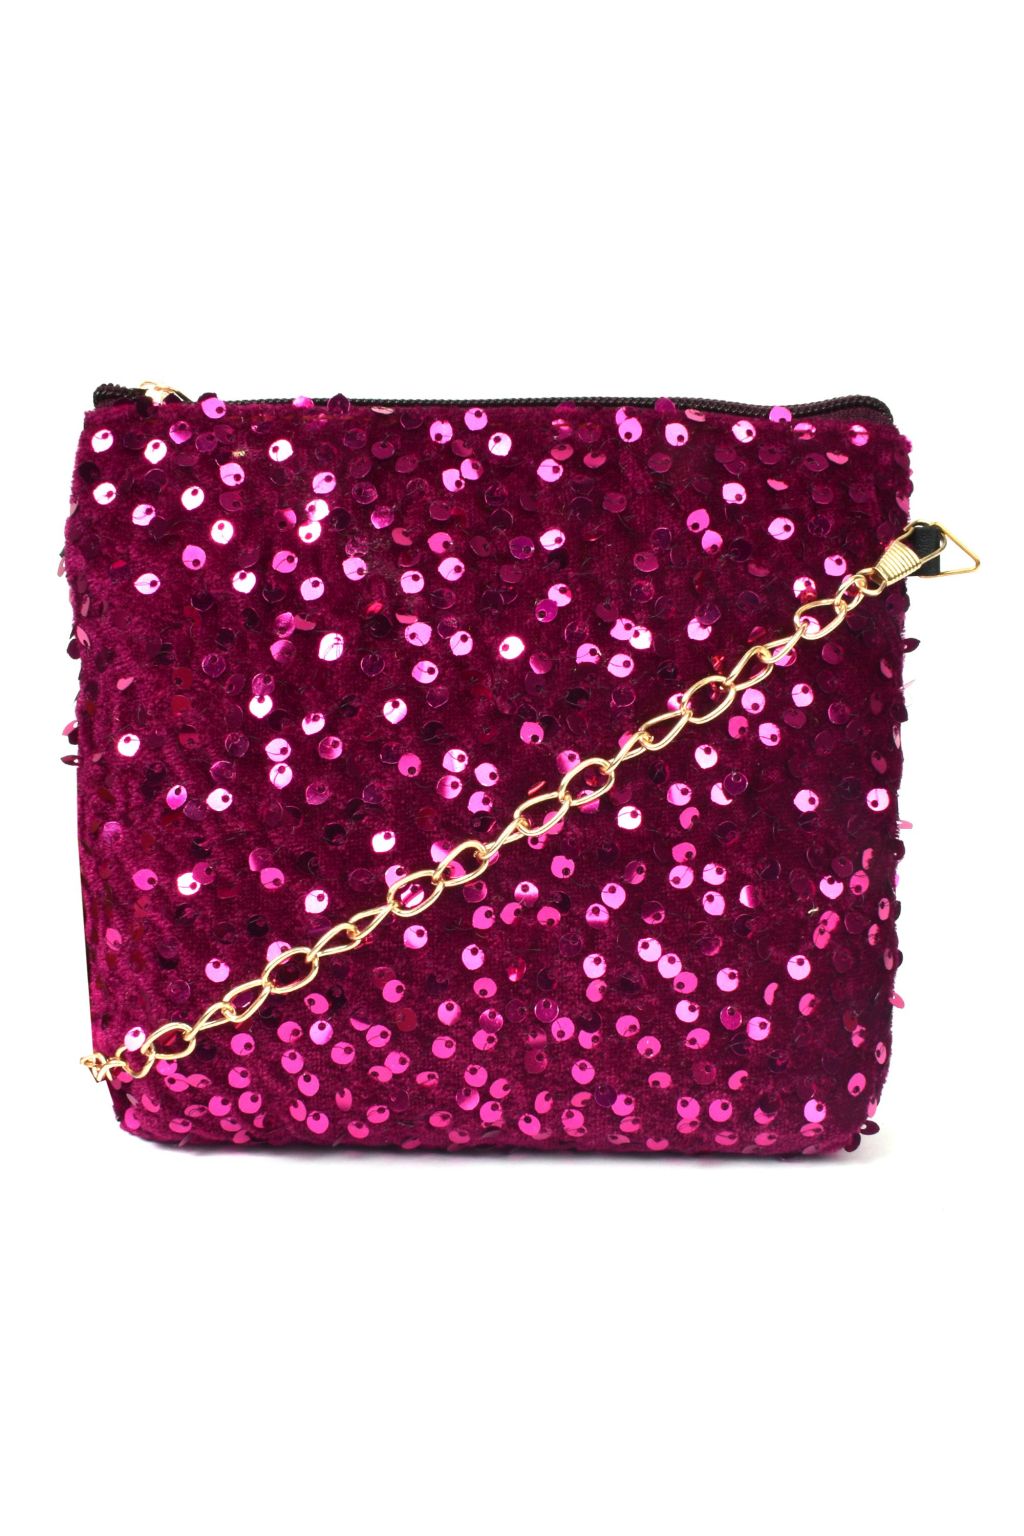 1980s chanel iridescent pink sequin purse!!!! I DIE!!!!!! | Chanel handbag  boy, Chanel handbags, Chanel bag